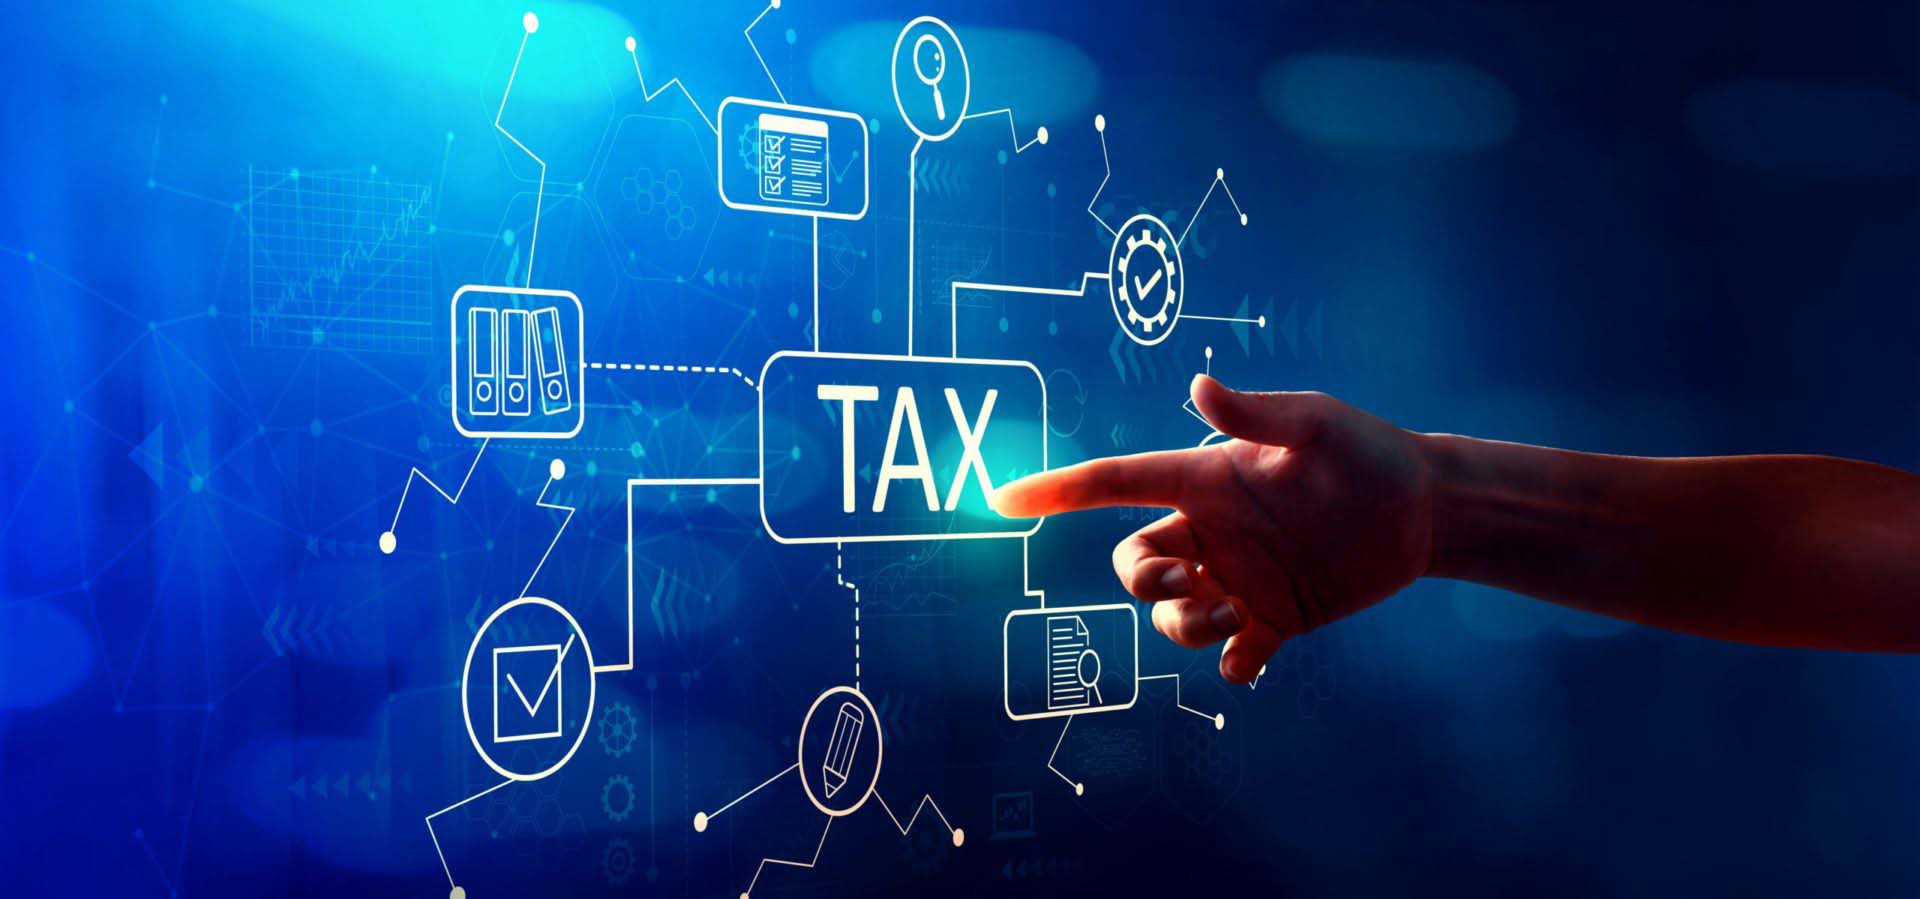 Tax & Tech Trends from TEI 2020 Global Tax Management